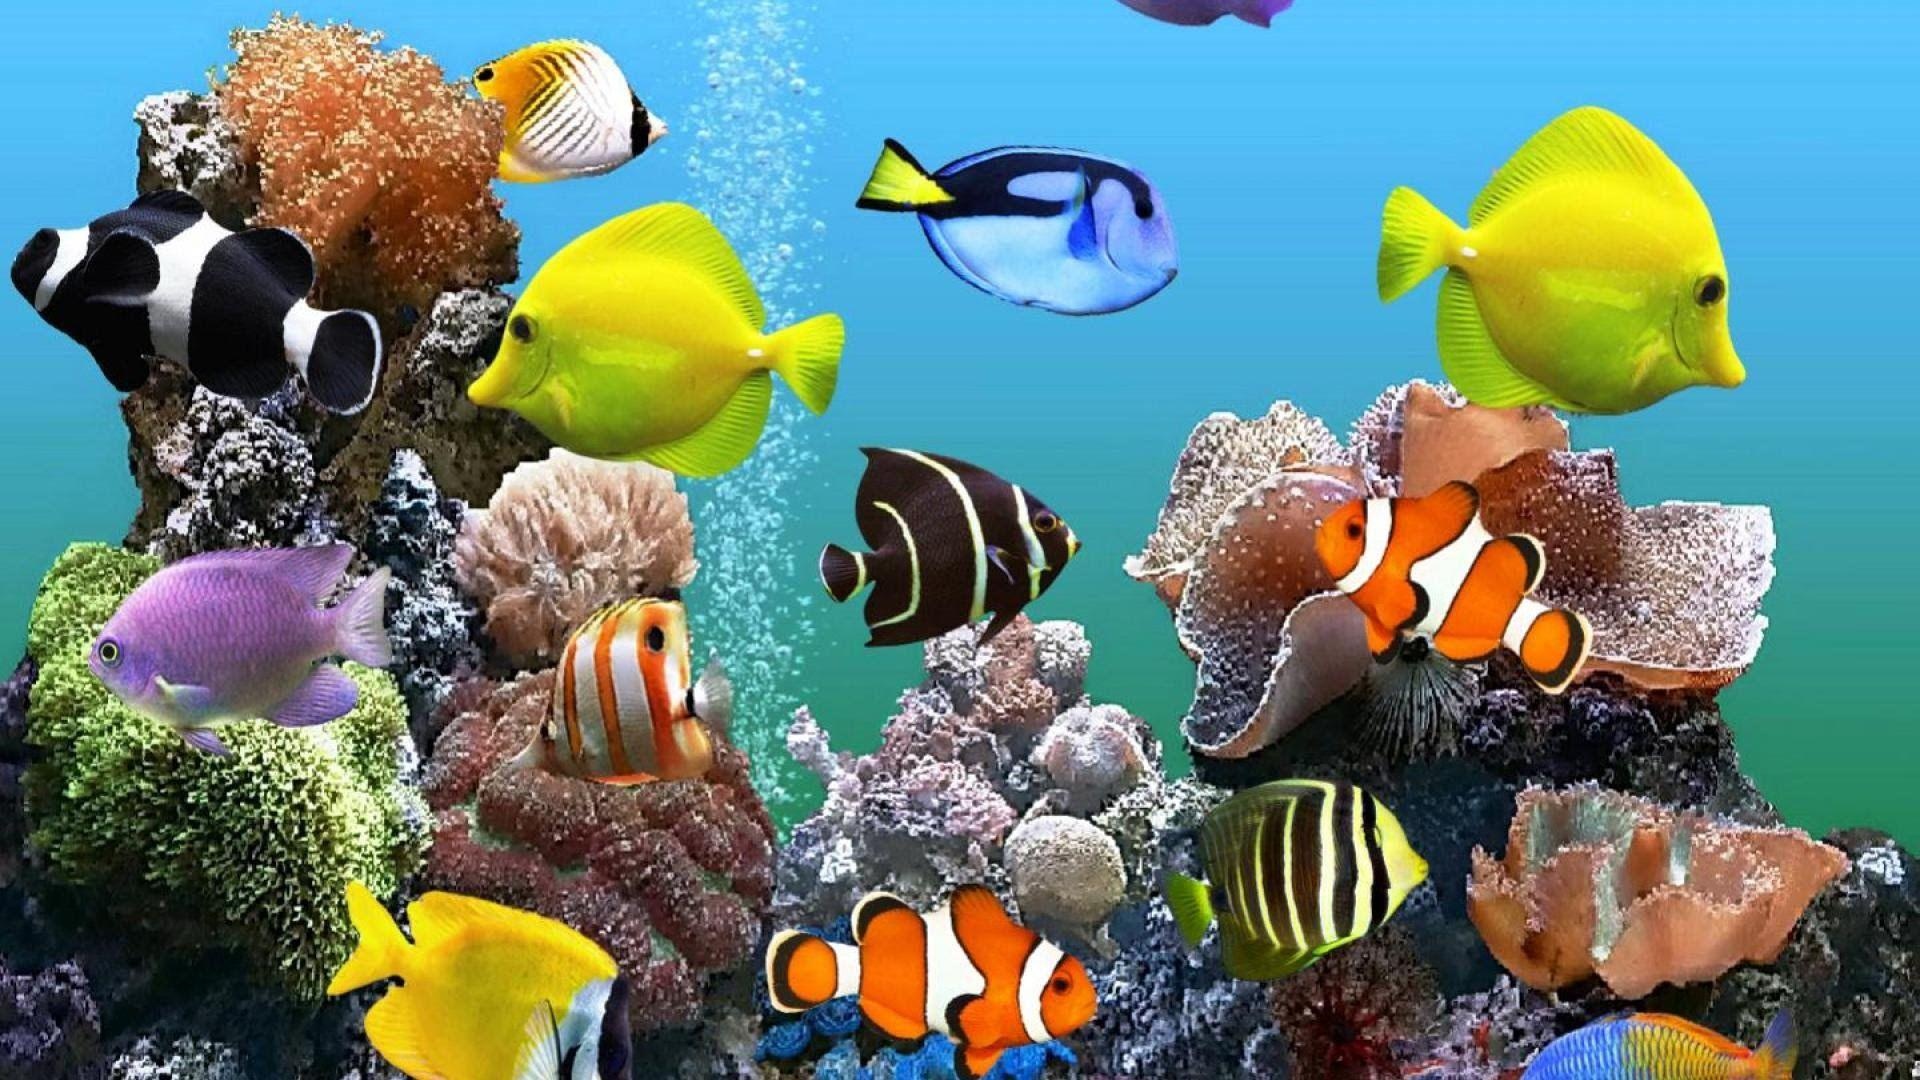 Aquarium, Oceanic paradise, Vibrant sea creatures, Diverse marine life, Eerie beauty, 1920x1080 Full HD Desktop